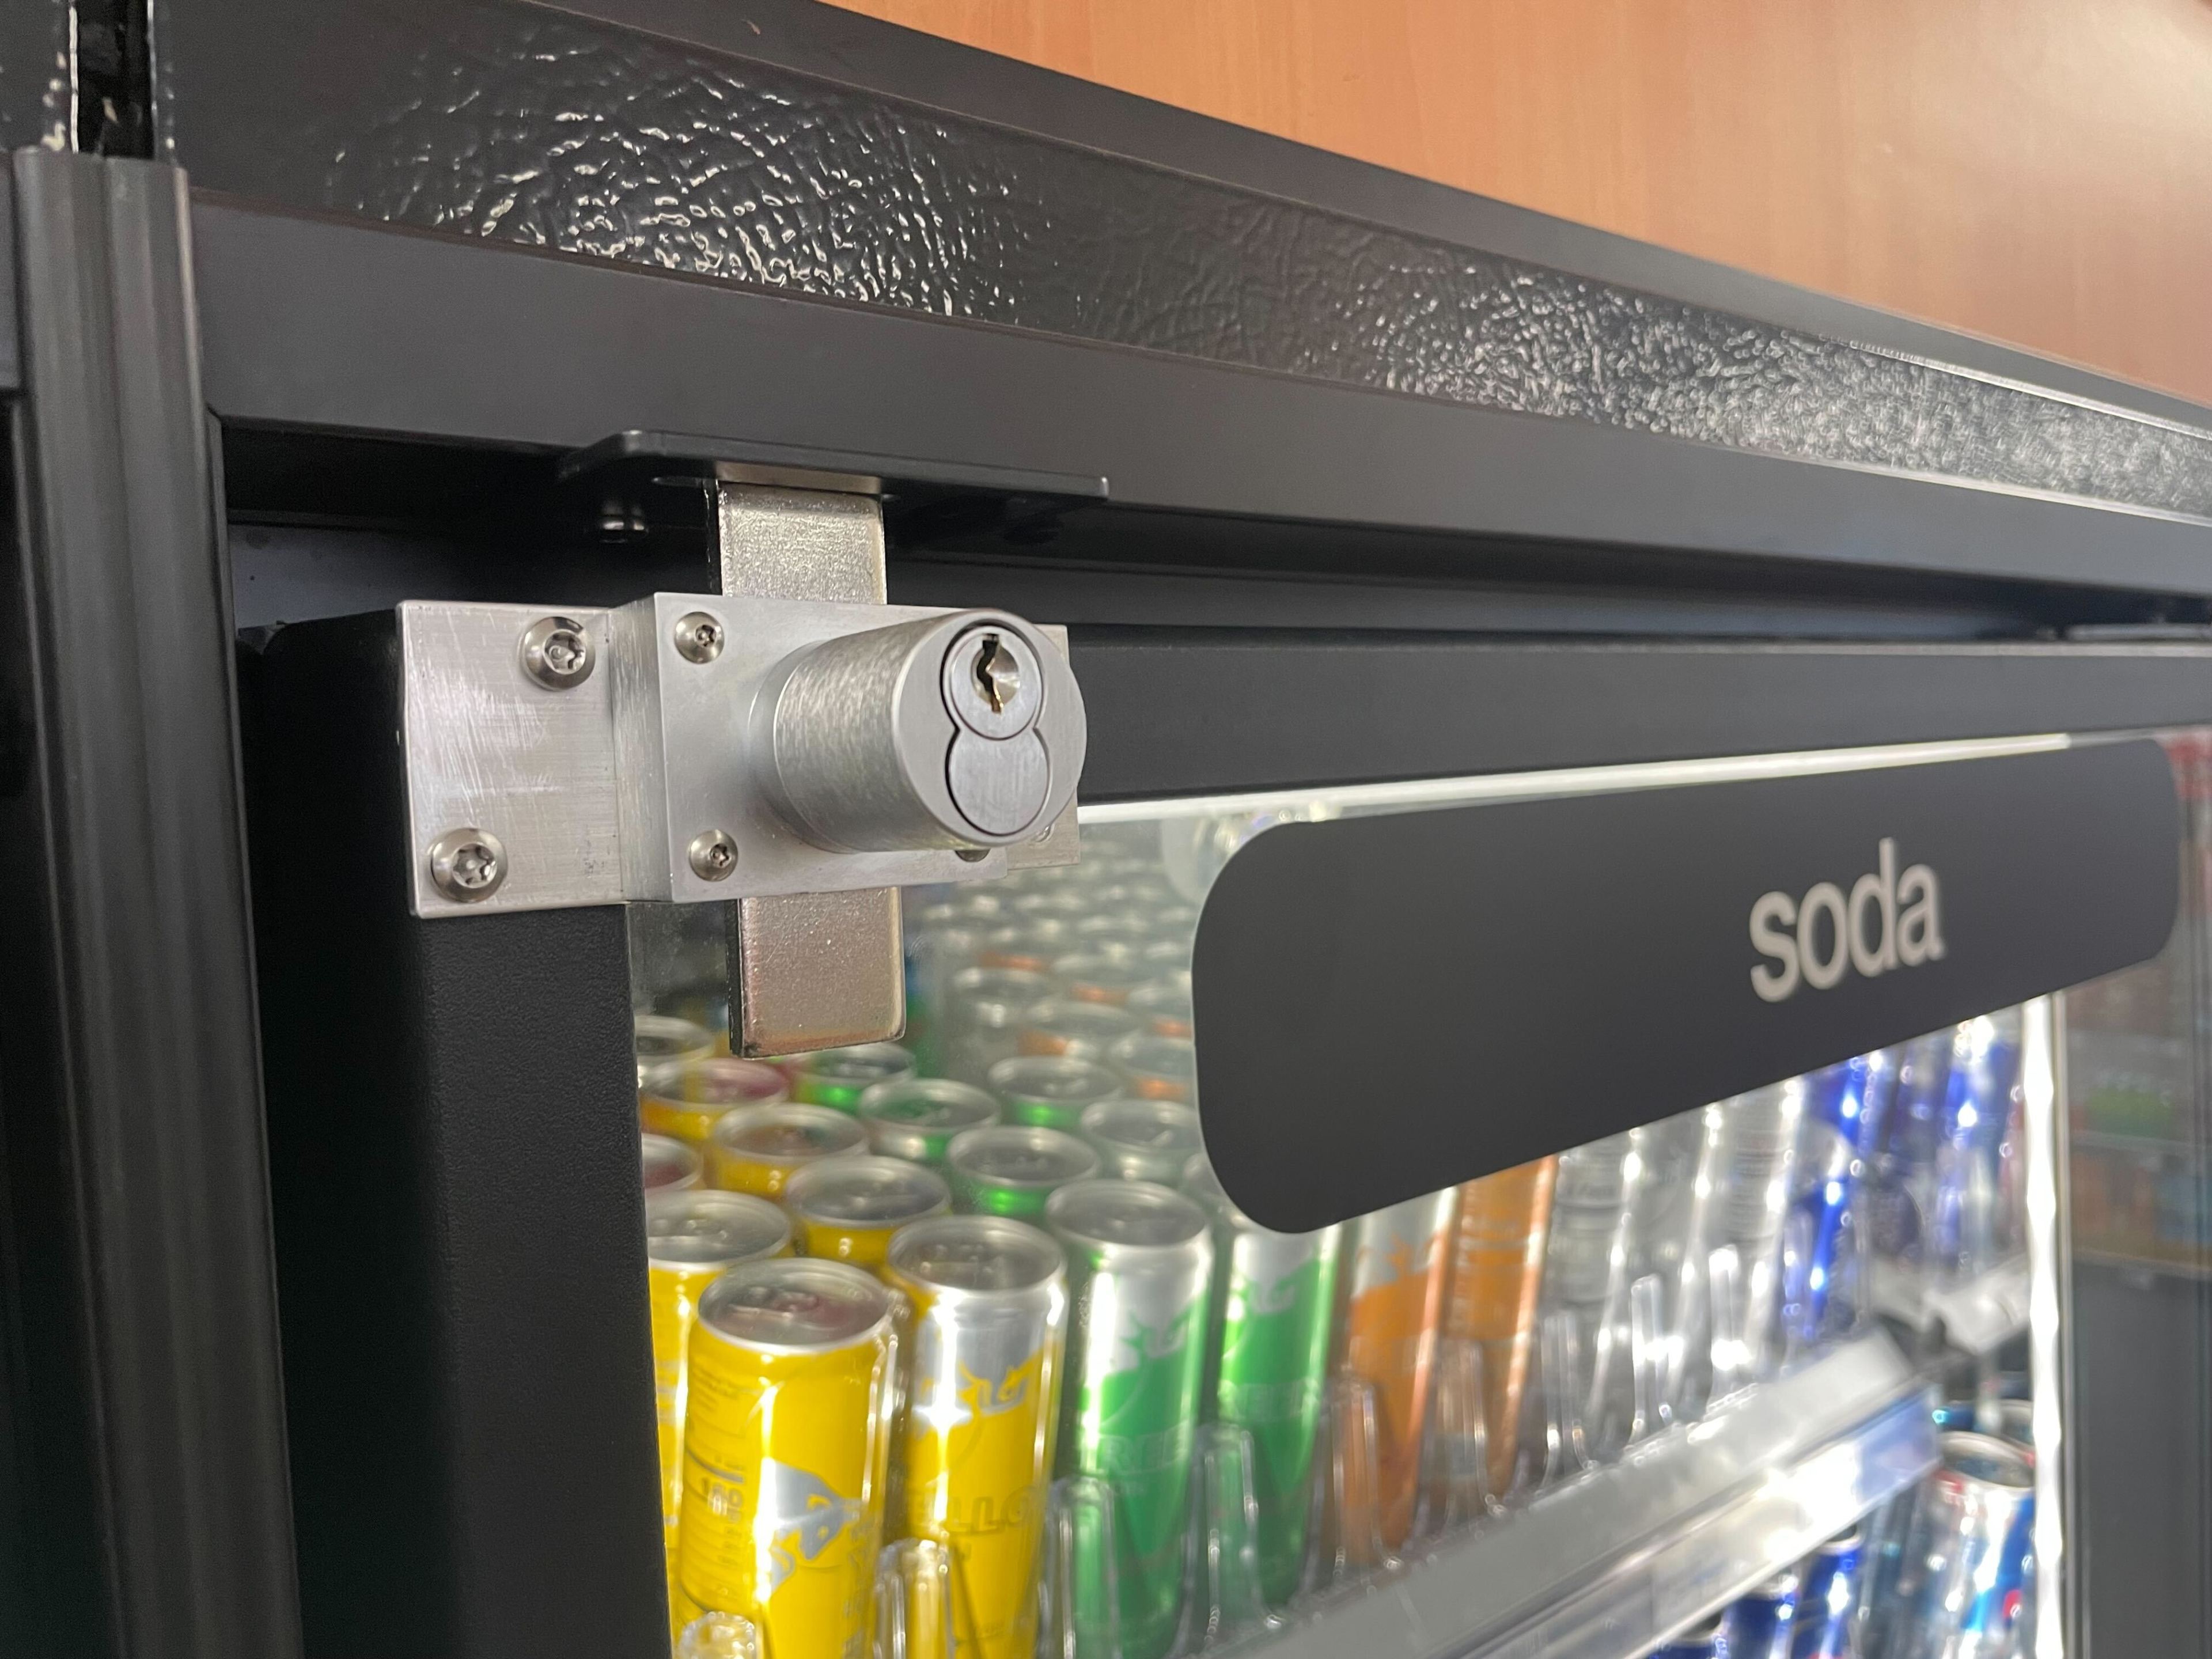 A locked refrigerator with soda inside